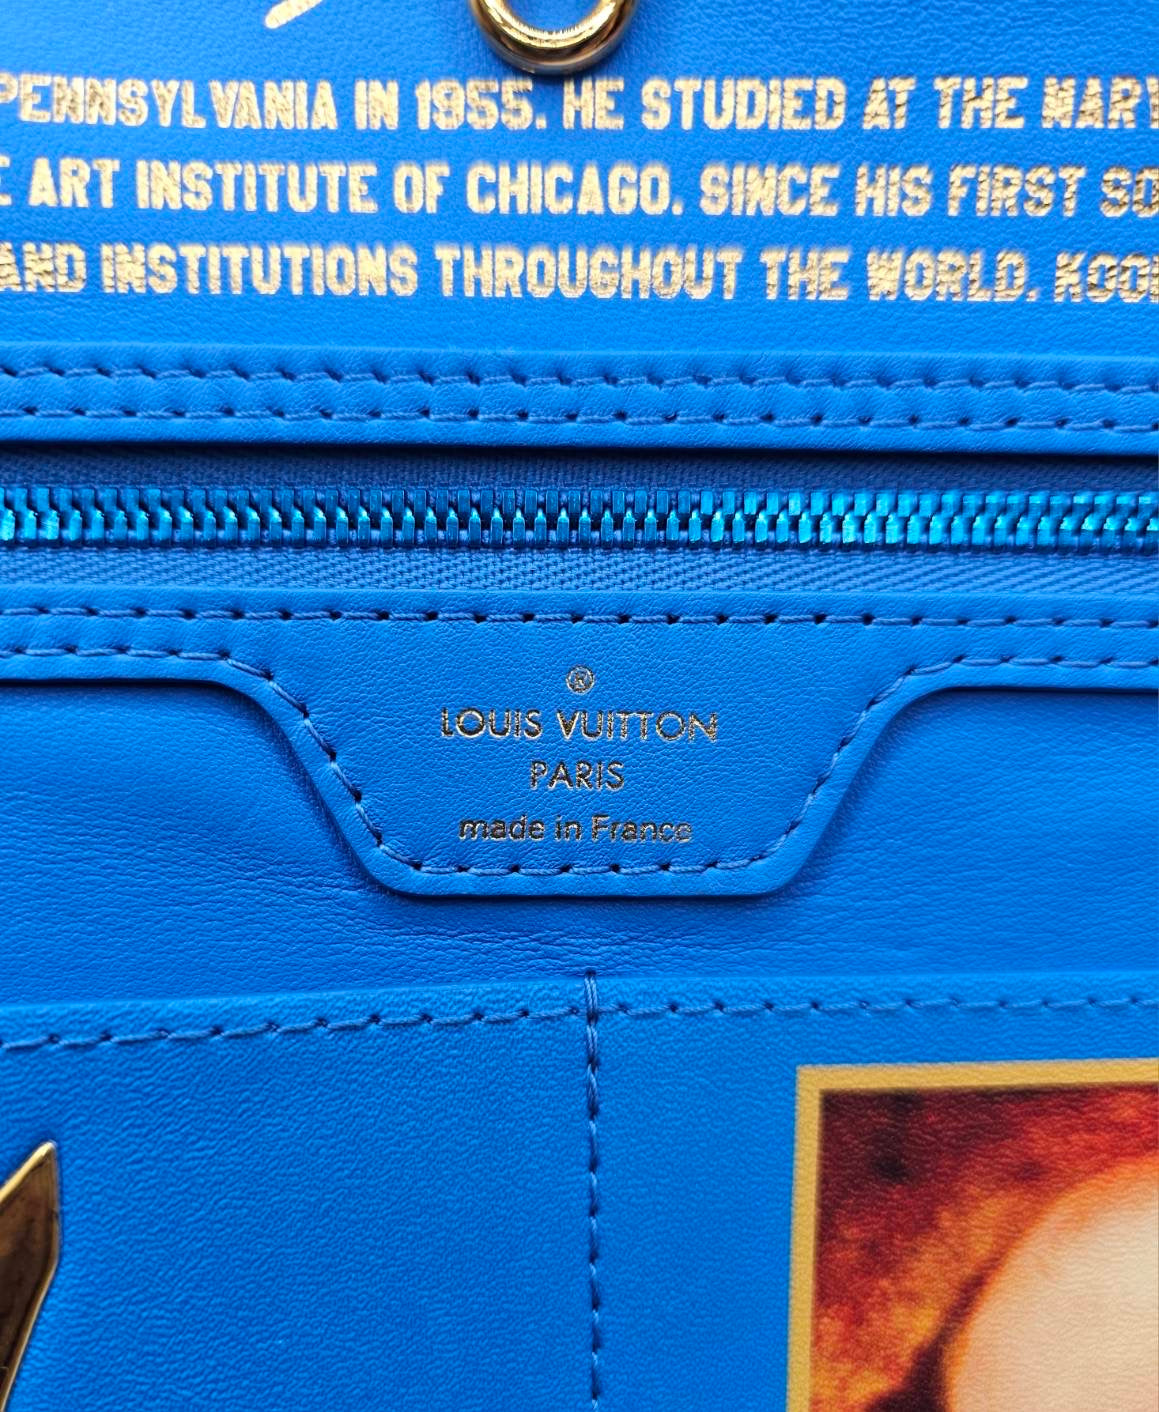 Louis Vuitton Ltd. Ed. Neverfull Jeff Koons Rubens Mm in Blue